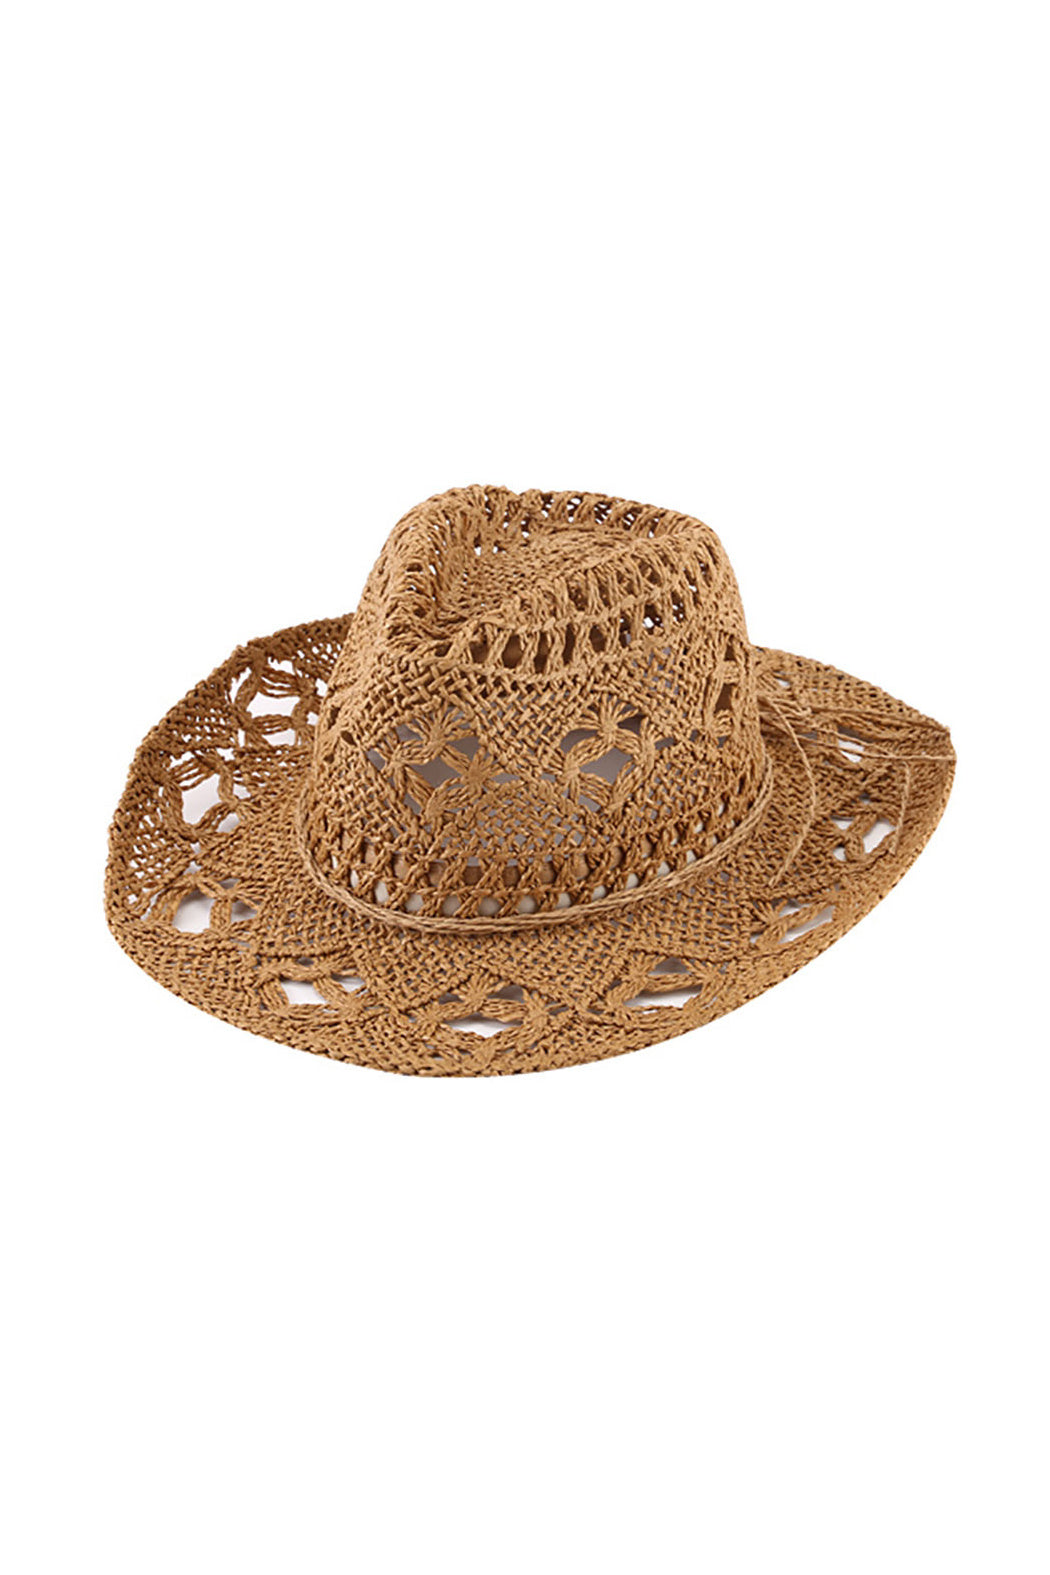 Crochet Style Straw Cowboy Hat